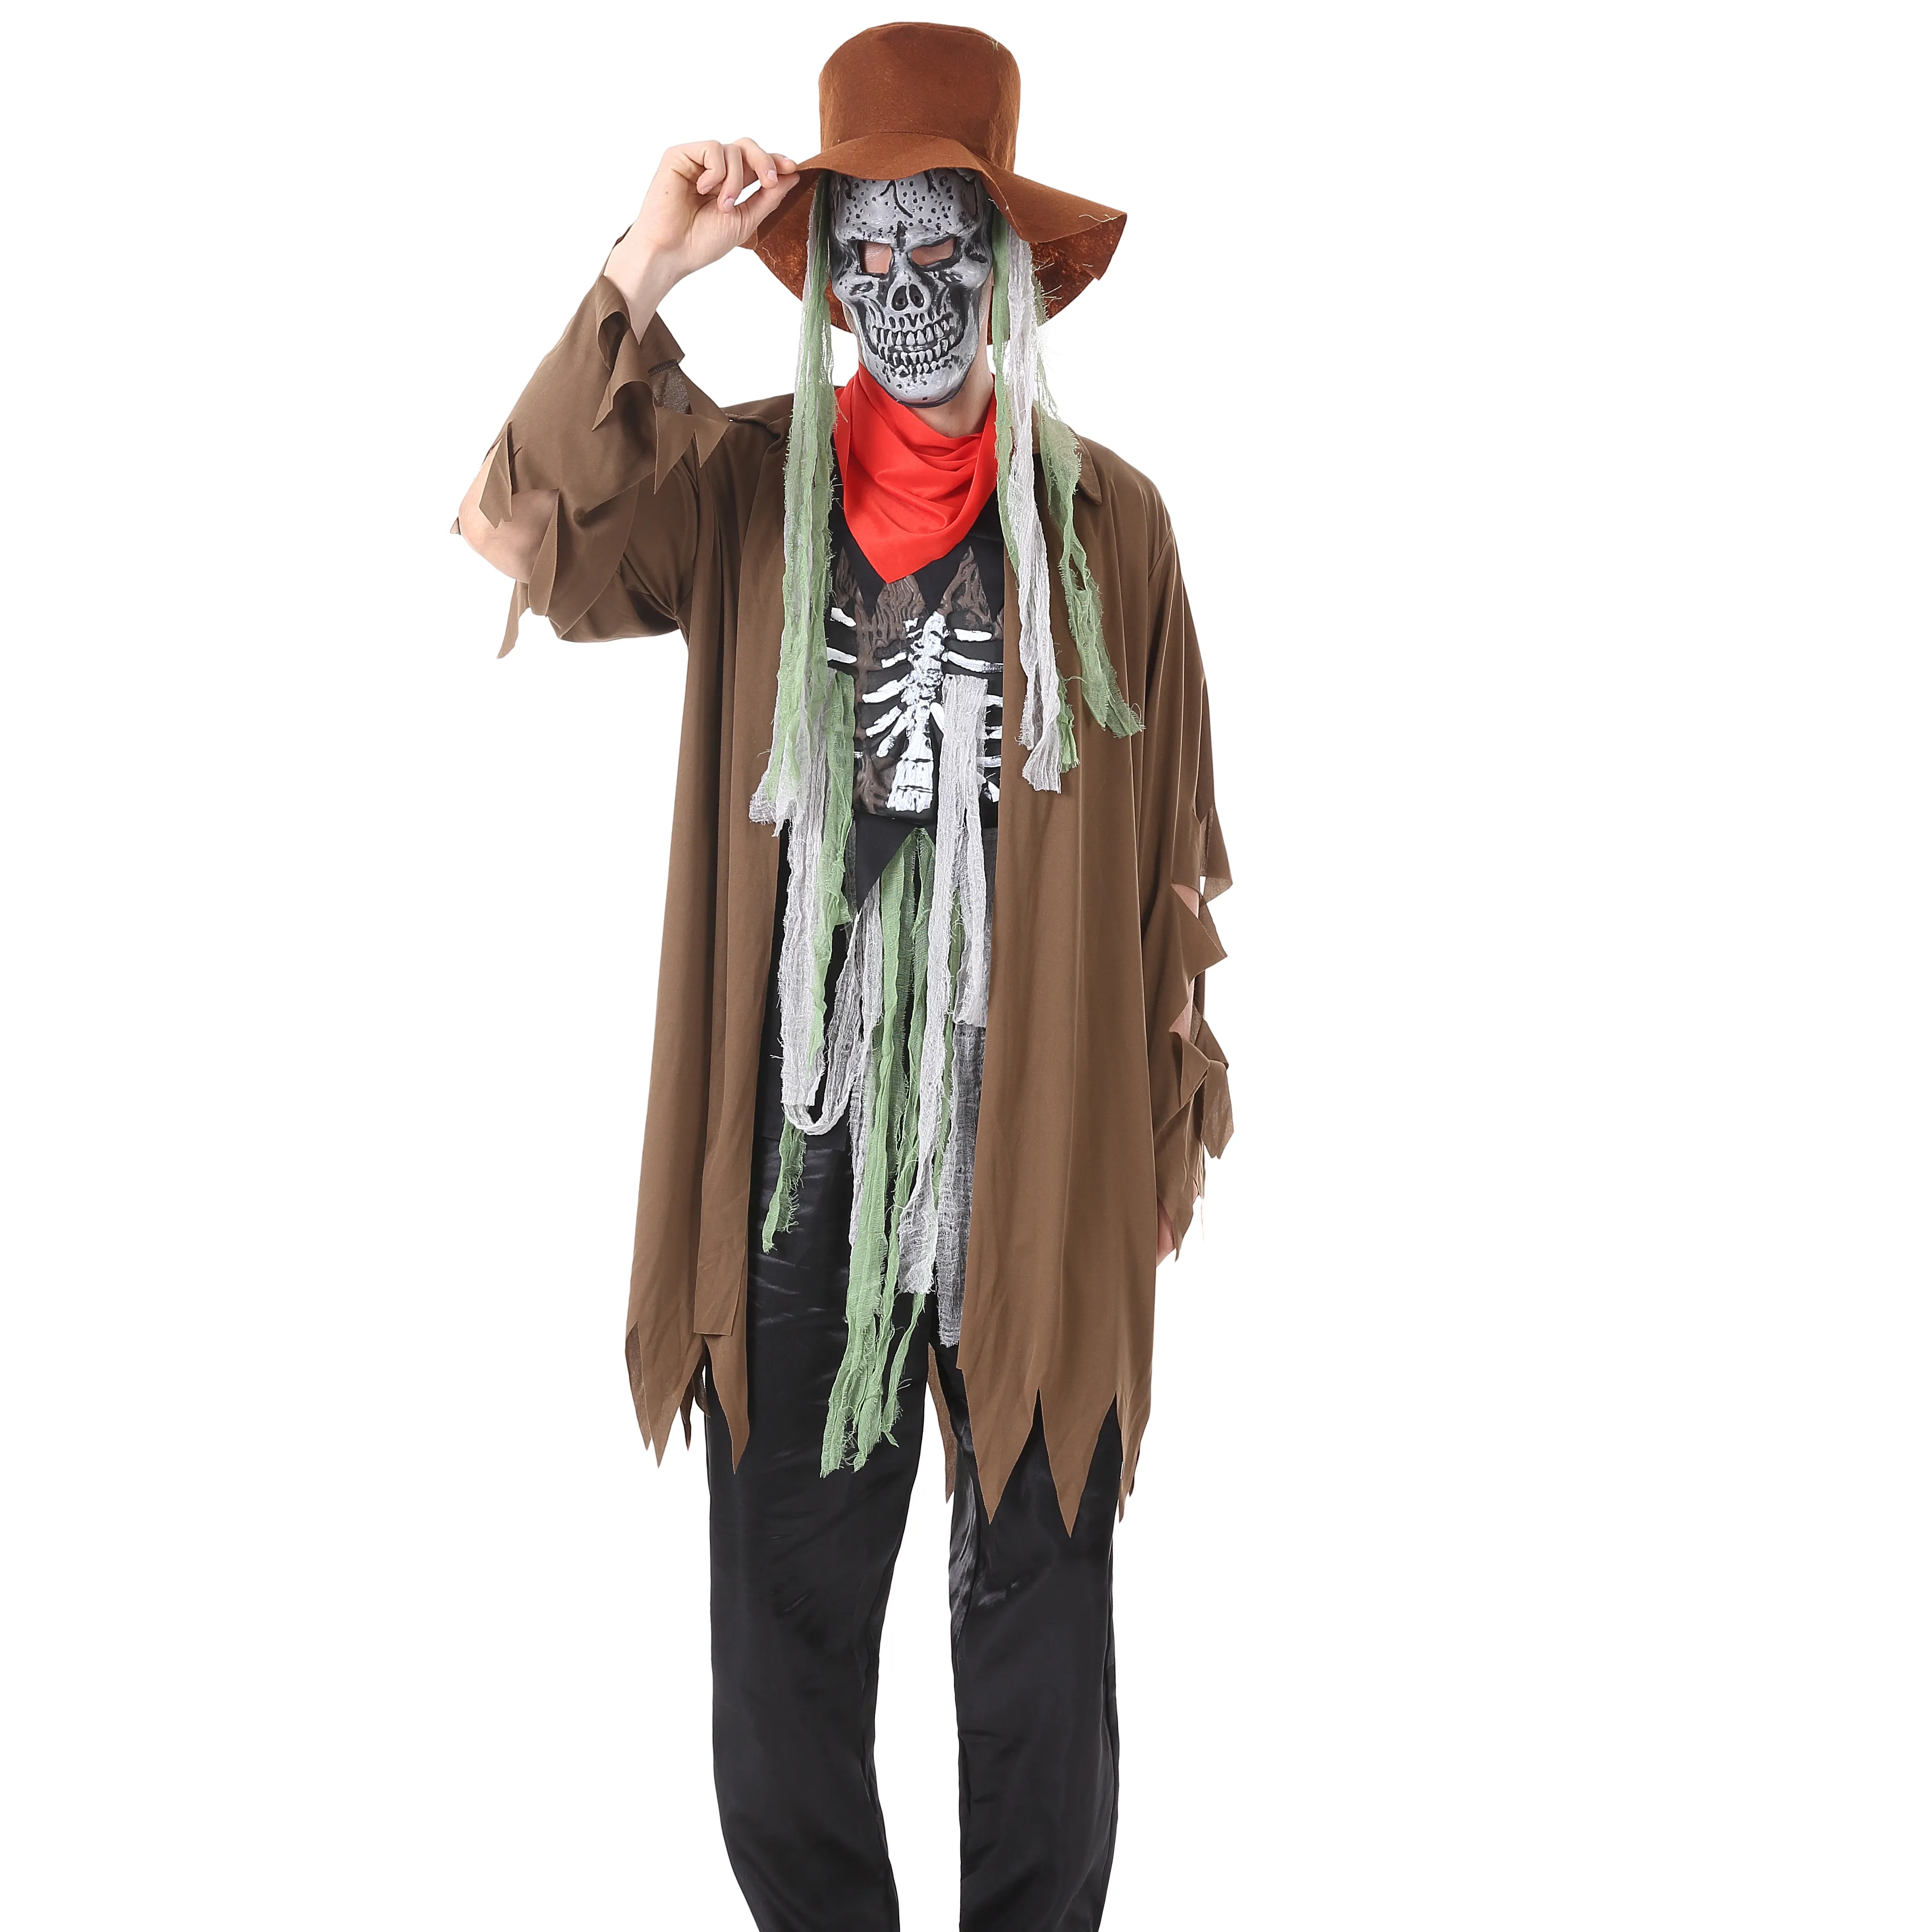 Adulto Halloween Traje de Cowboy Legal Fantasma Traje Zumbi Osso Pano